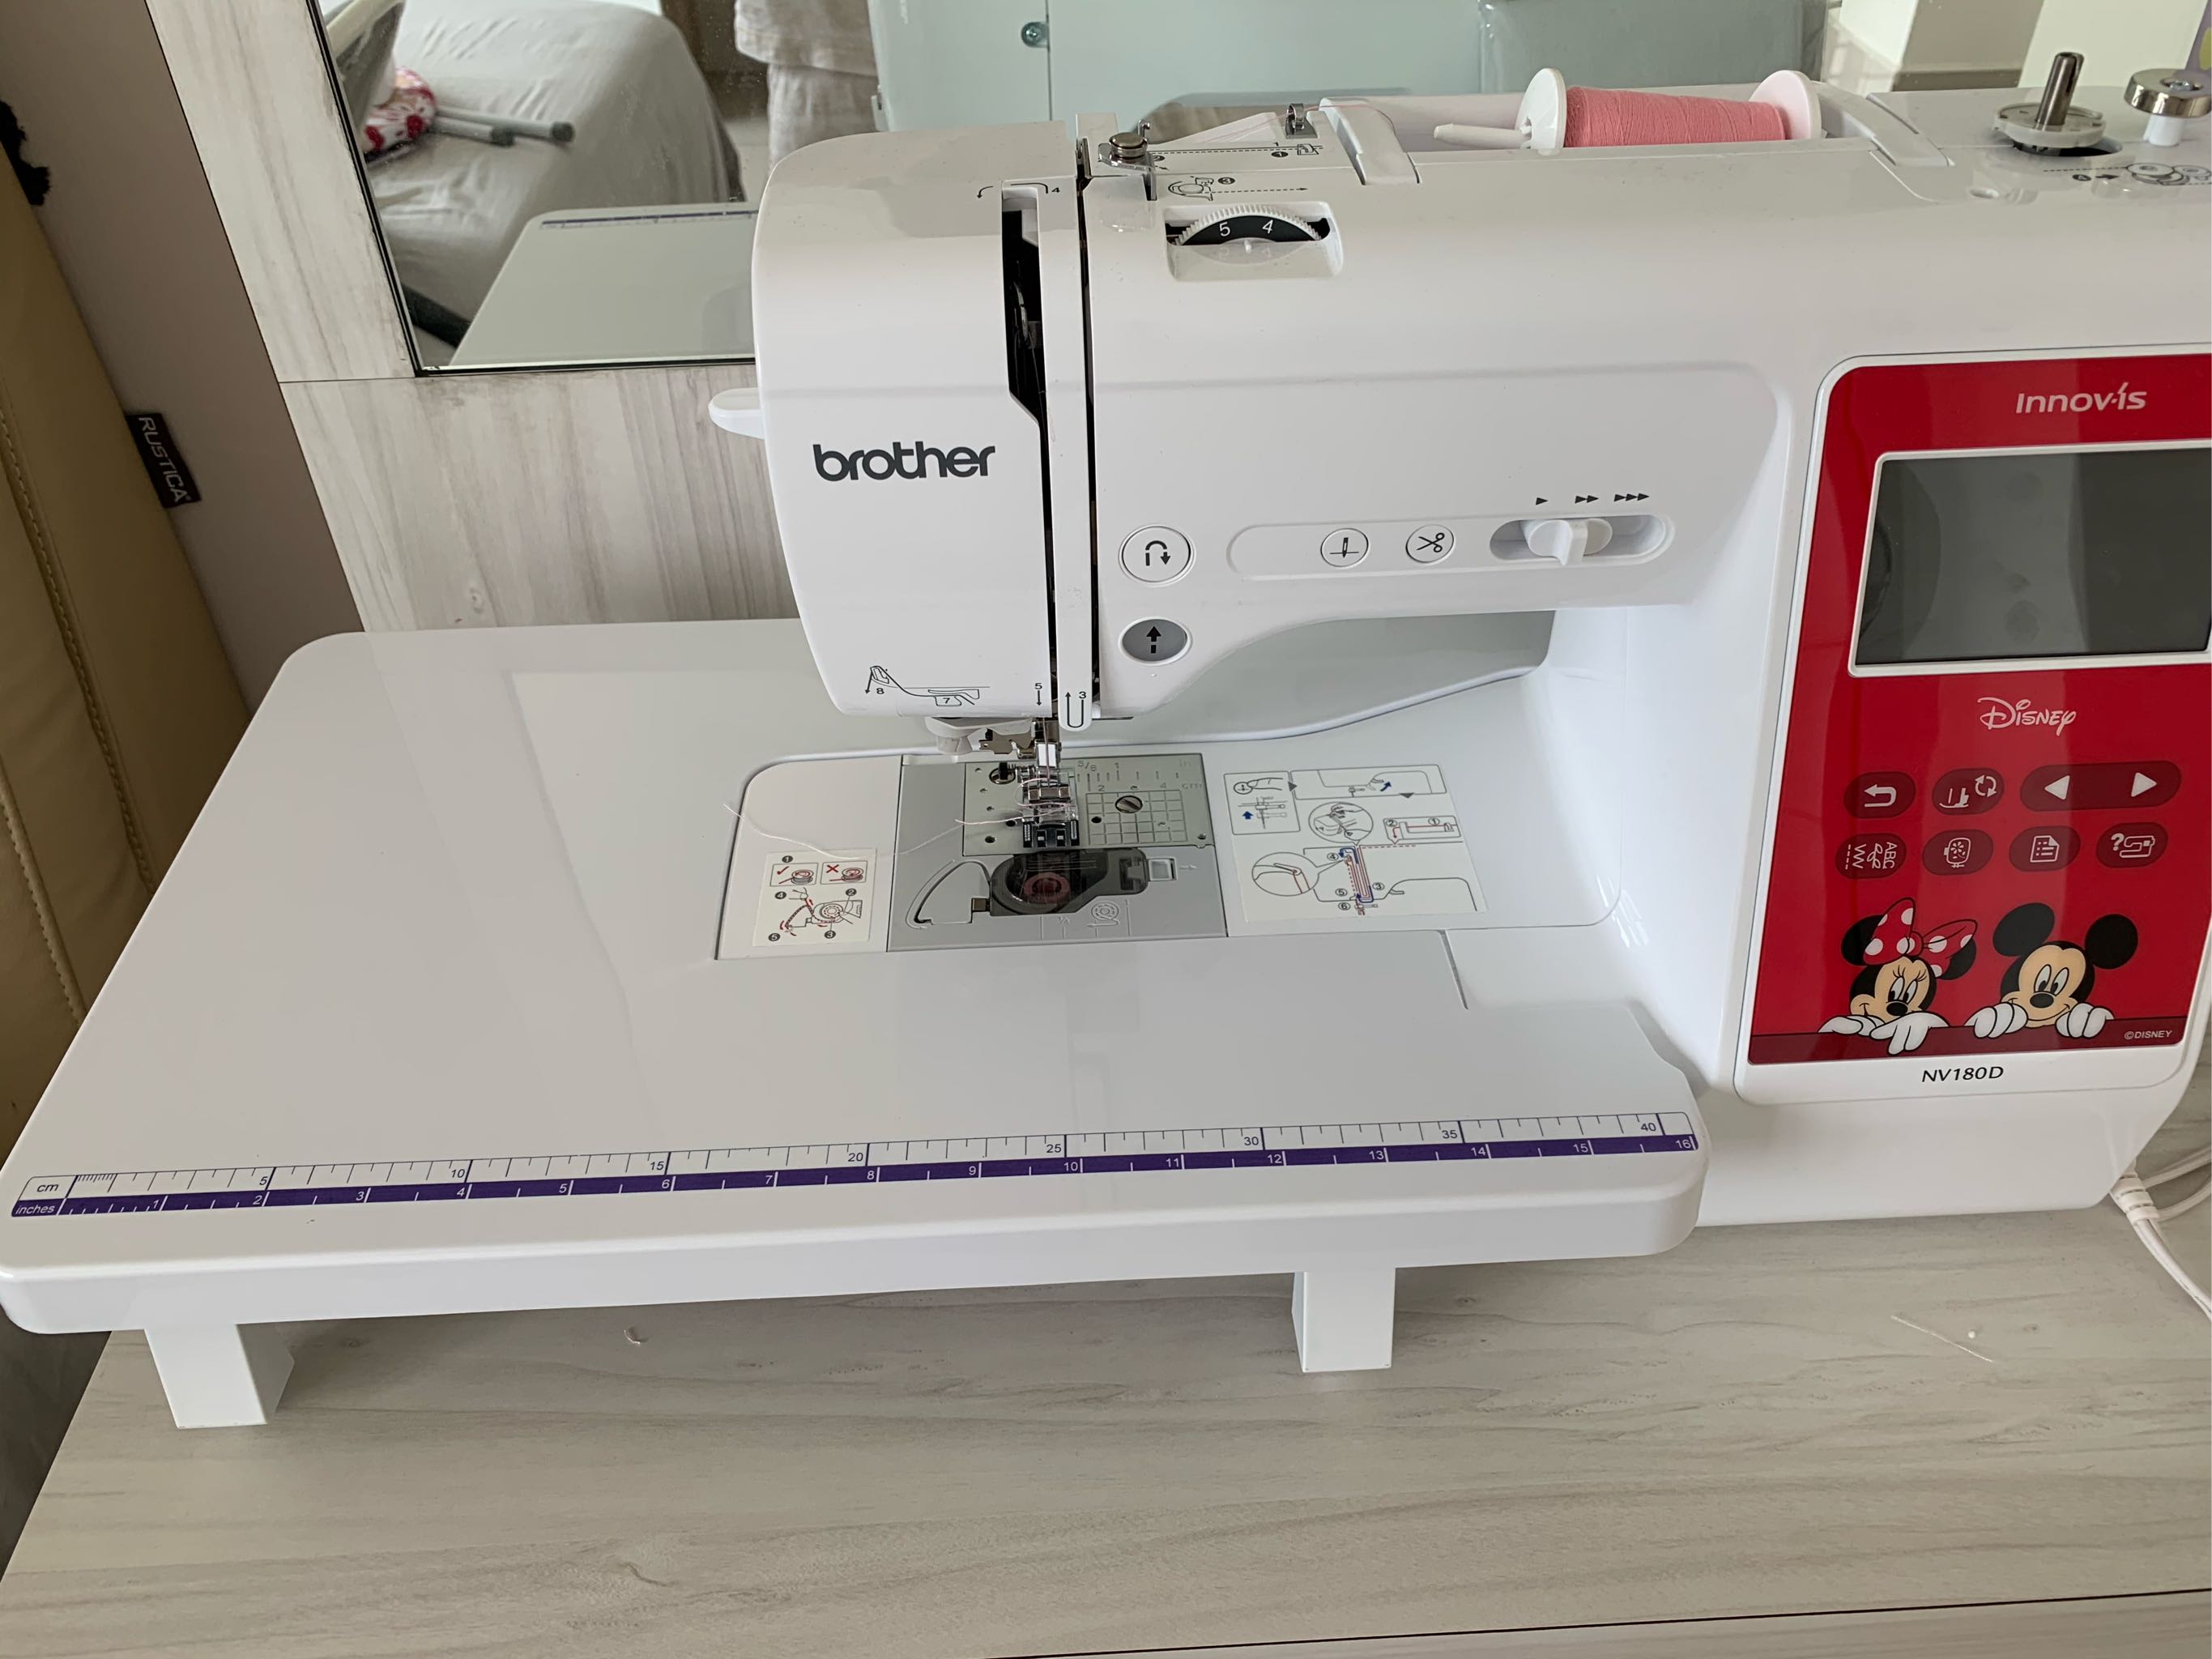 Brother Nv180 Nv180k nv180d ORIGINAL EXTENSION TABLE sewing machine